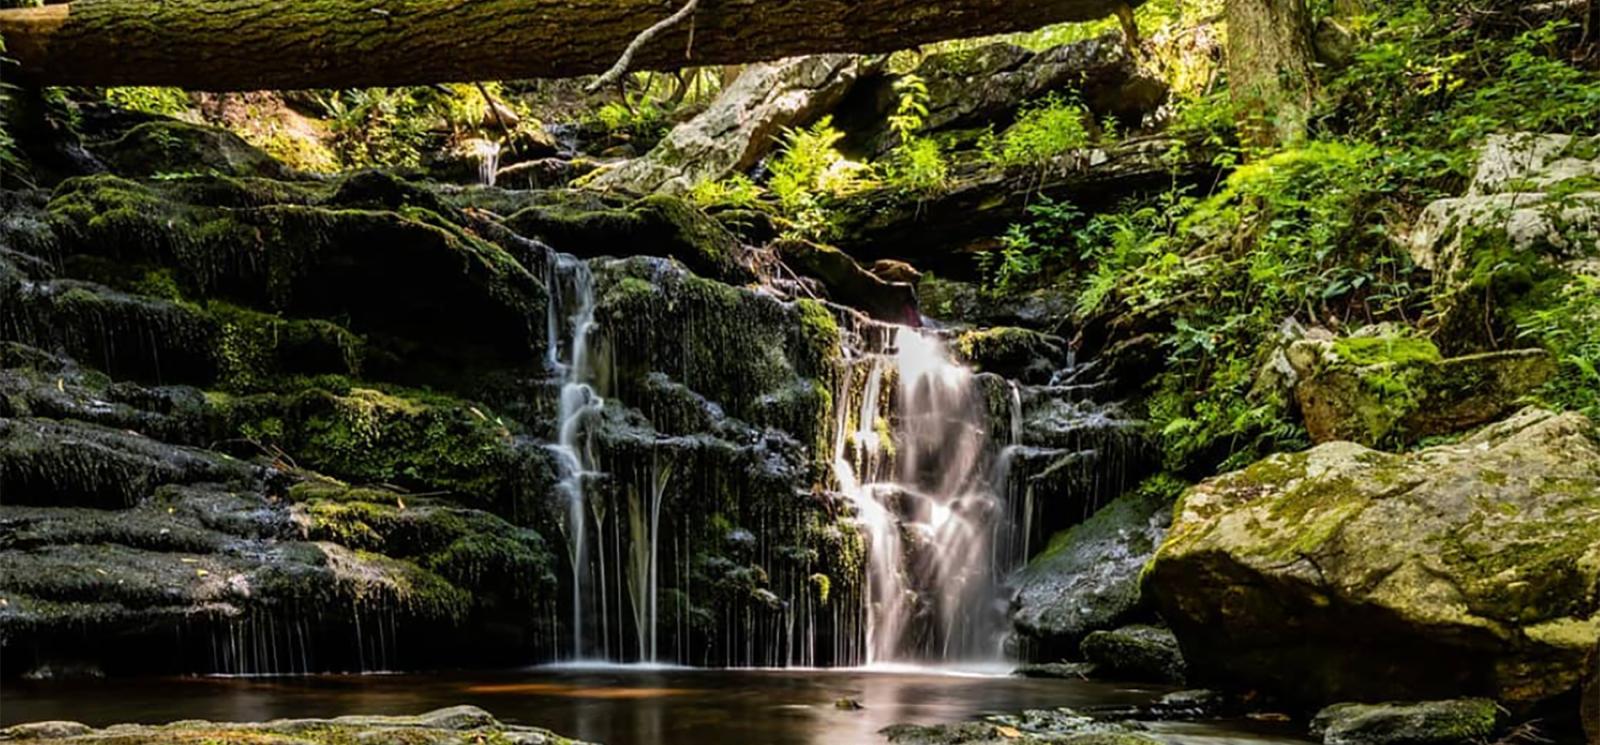 A running waterfall in the woods (Instagram@zachyeammans)